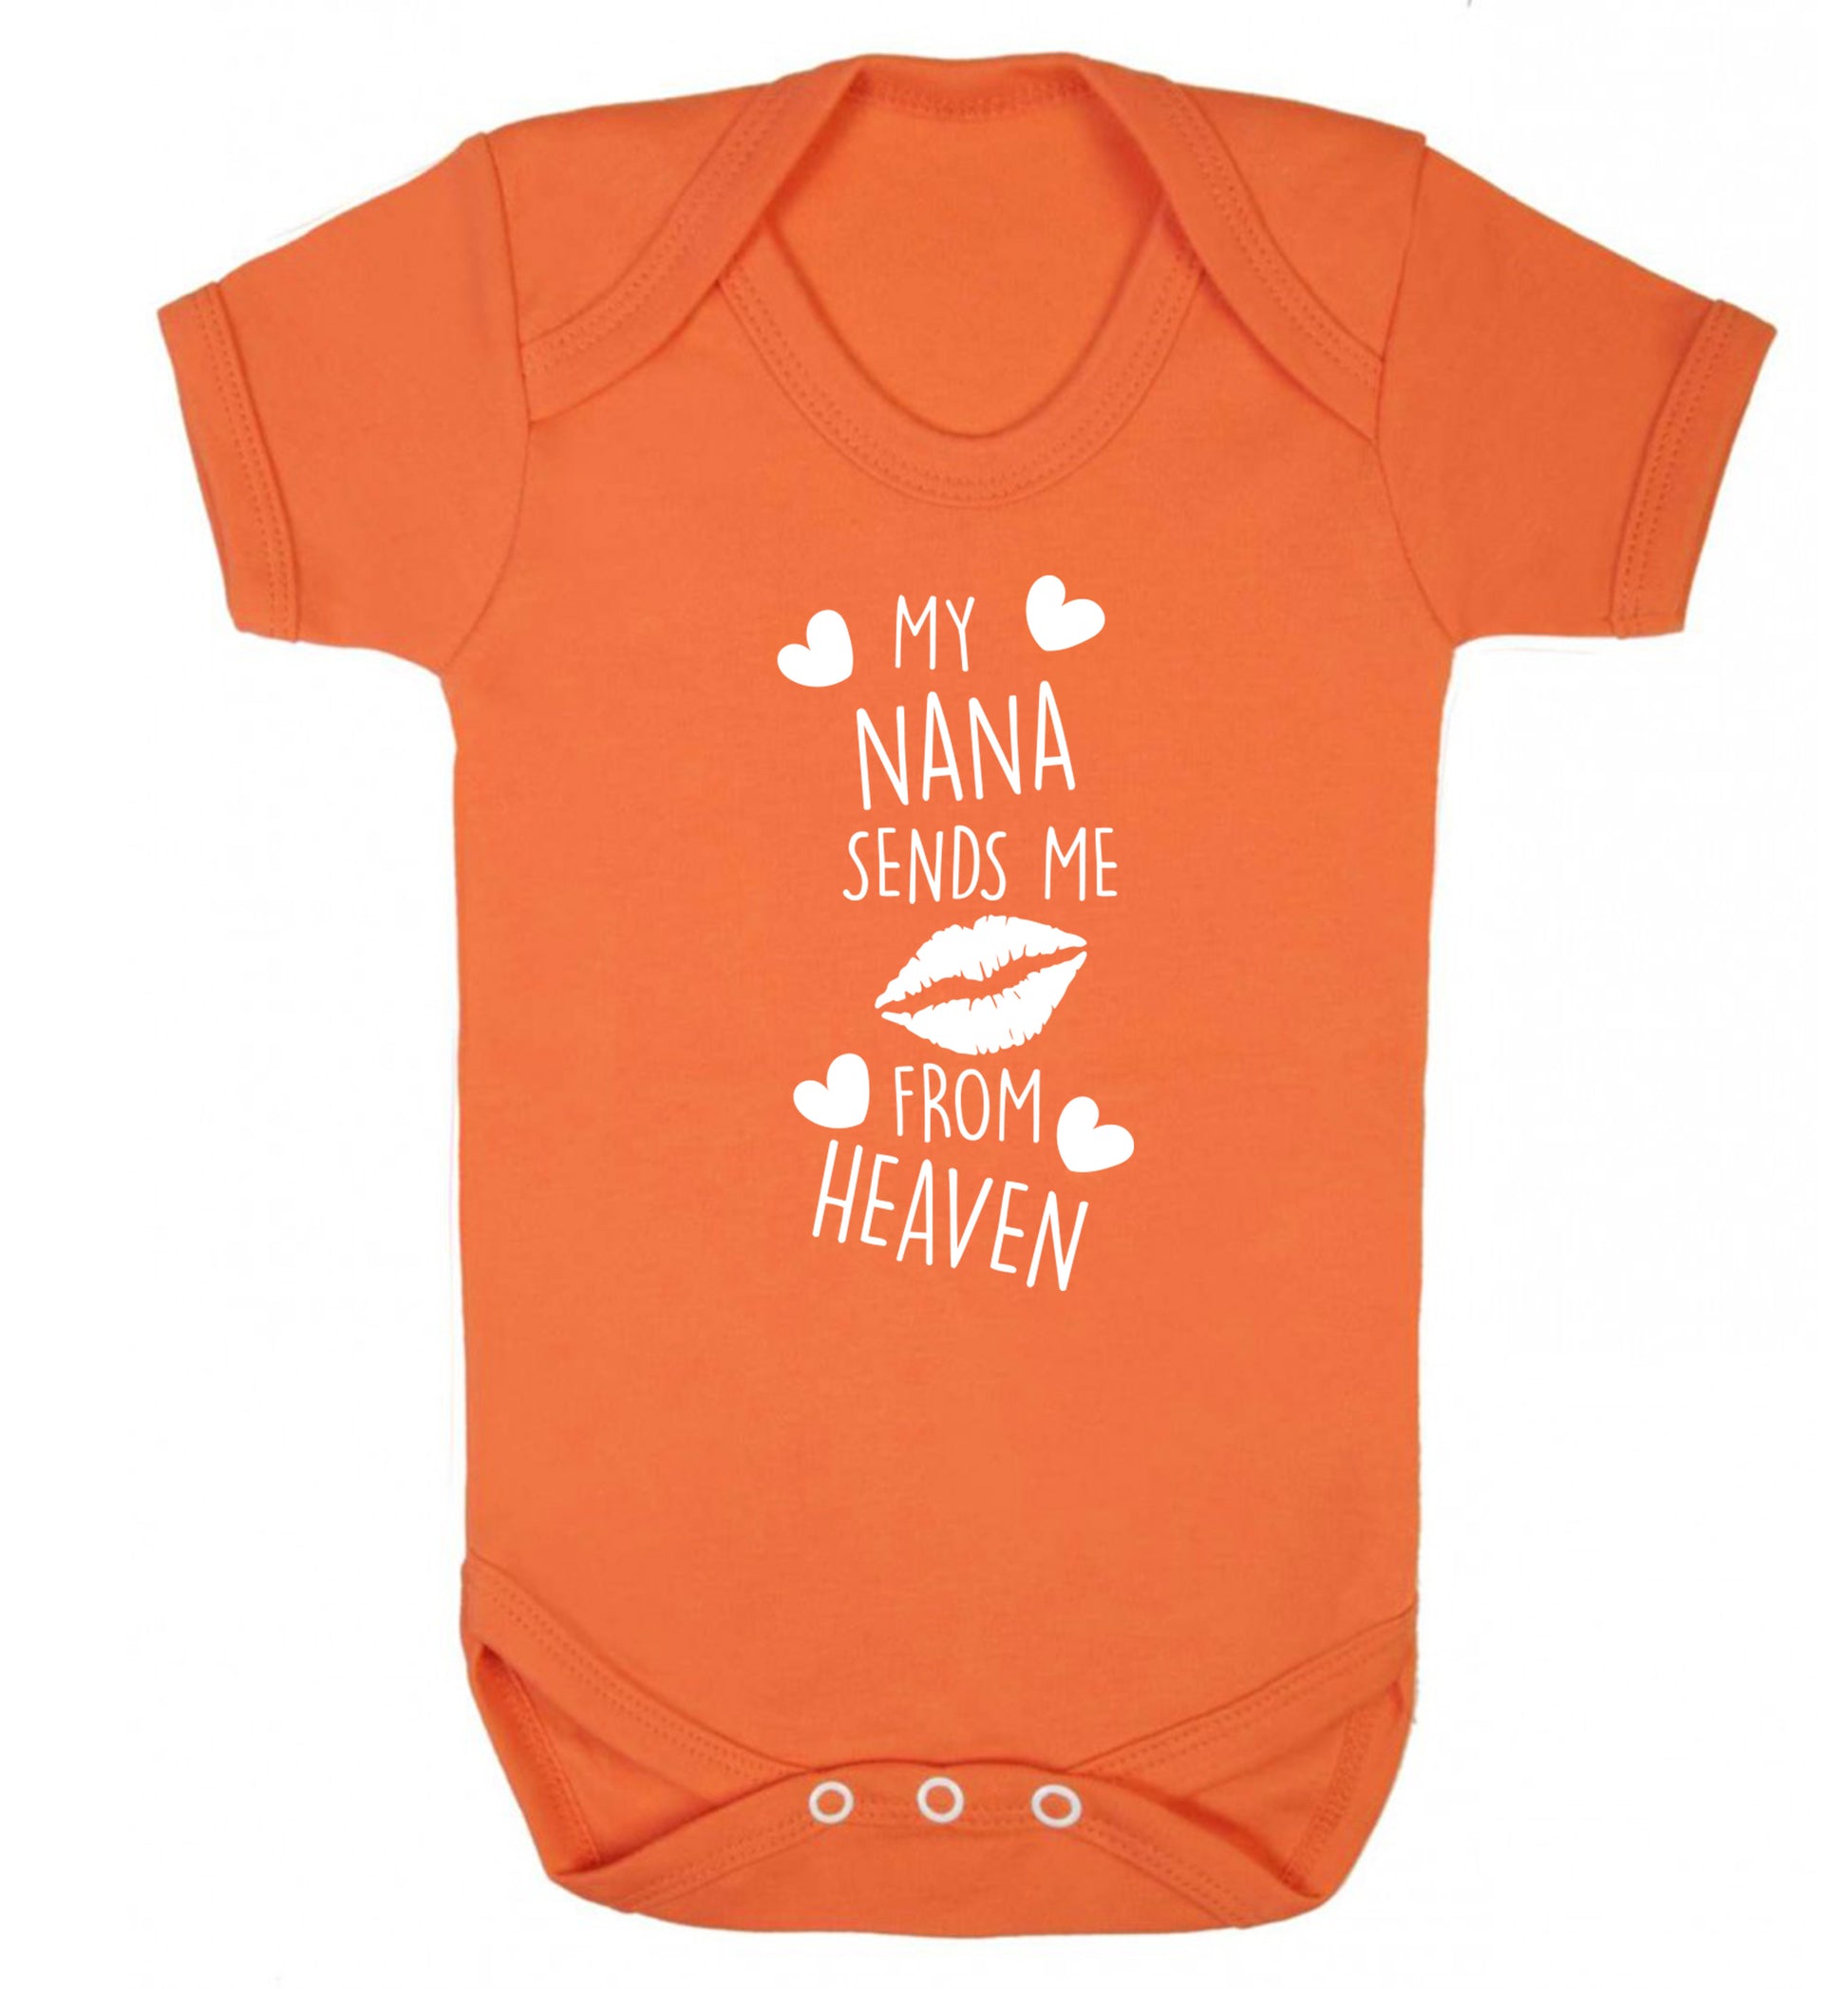 My nana sends me kisses from heaven Baby Vest orange 18-24 months